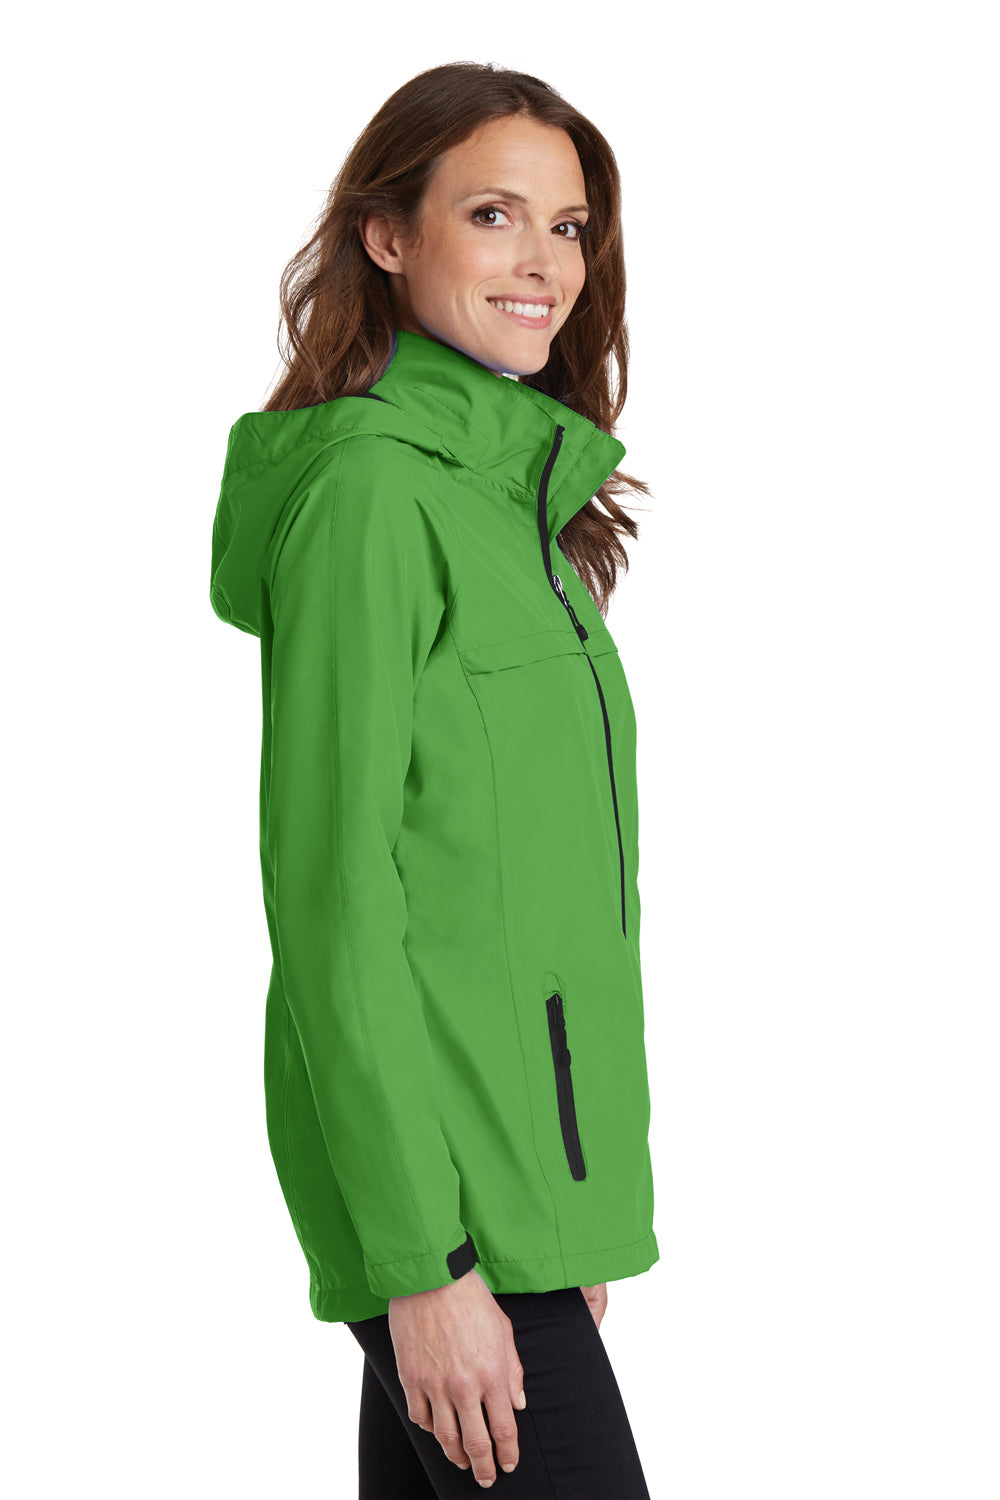 Port Authority L333 Womens Torrent Waterproof Full Zip Hooded Jacket Green Side